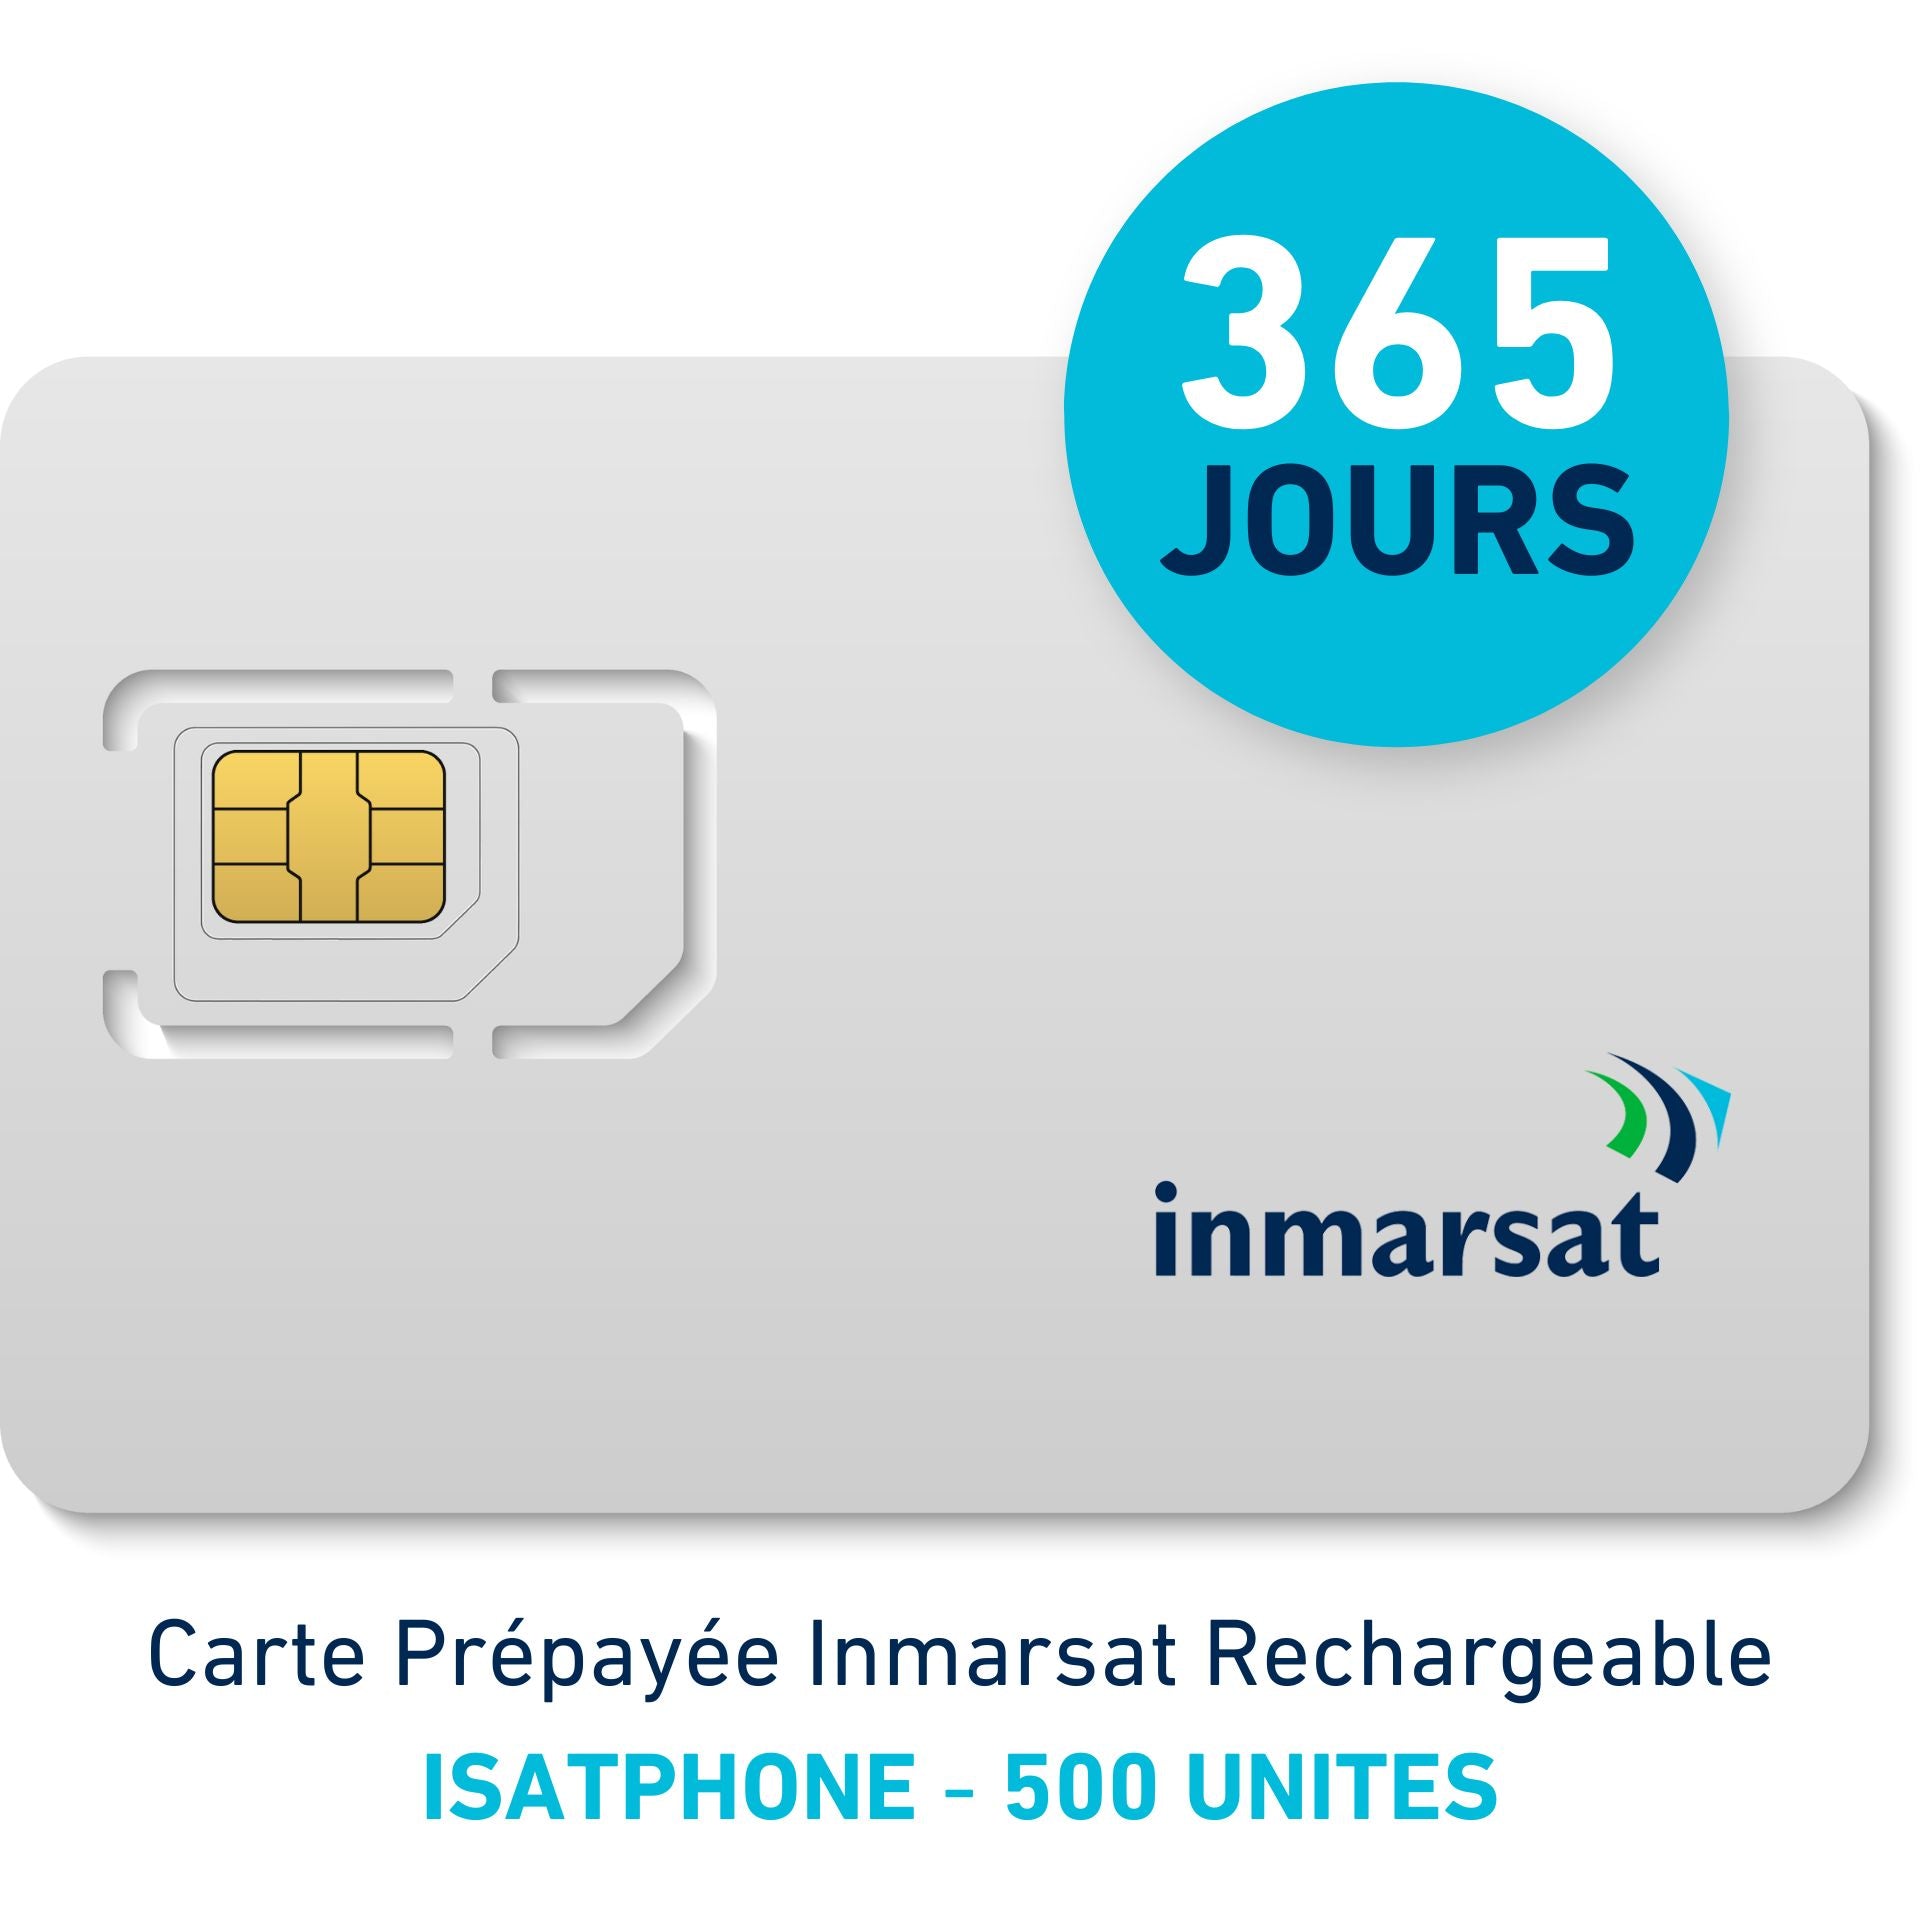 Carte Prépayée INMARSAT Rechargeable ISATPHONE - 500 UNITES - 365 JOURS